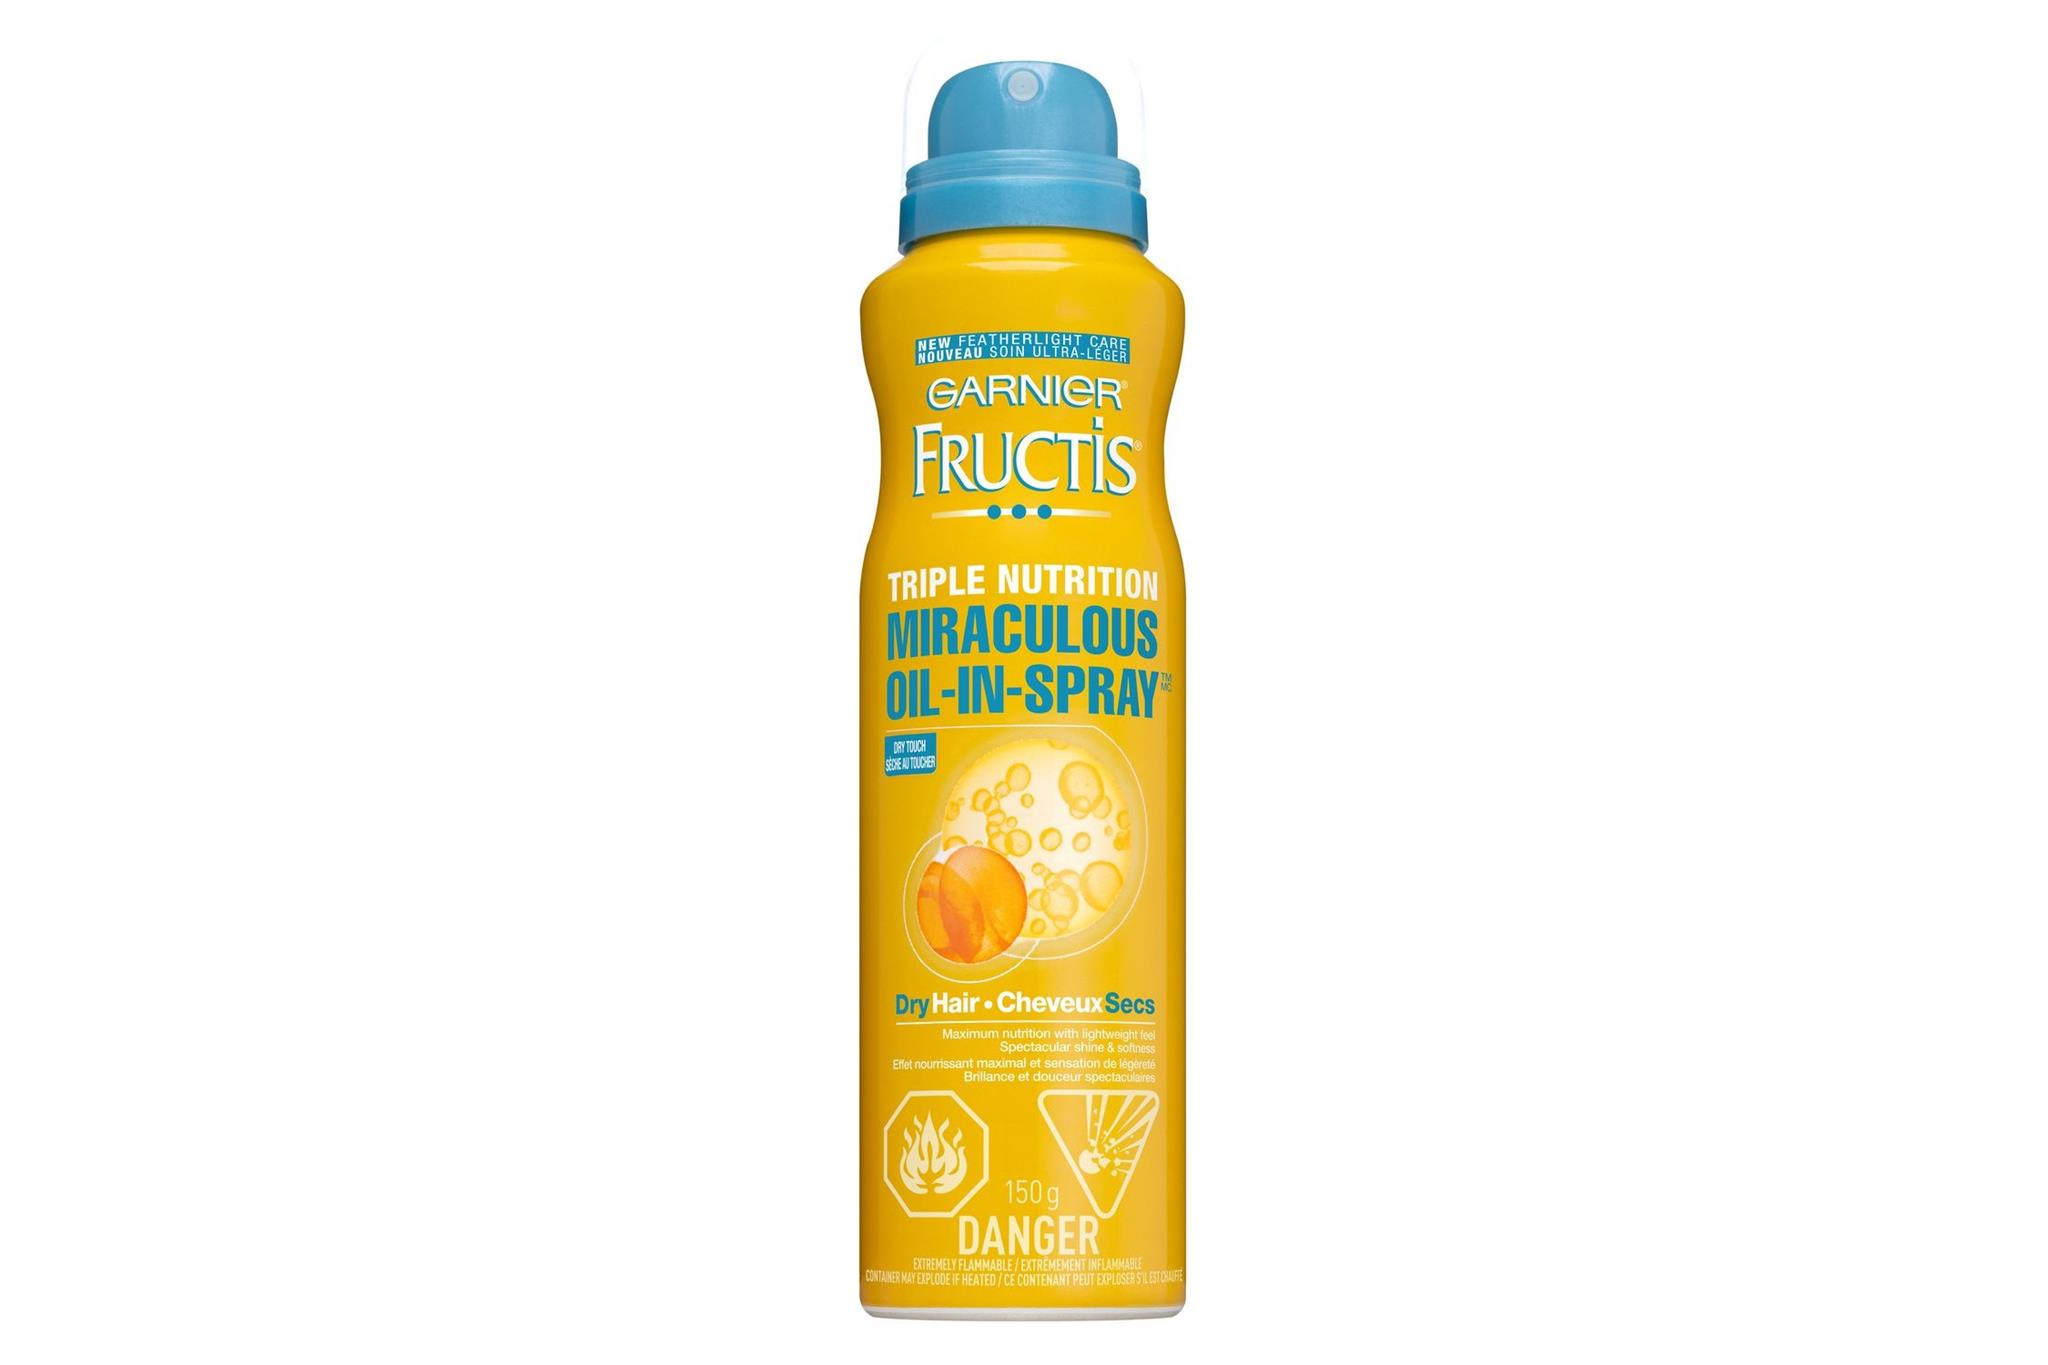 Garnier Fructis Miraculous Oil-In-Spray